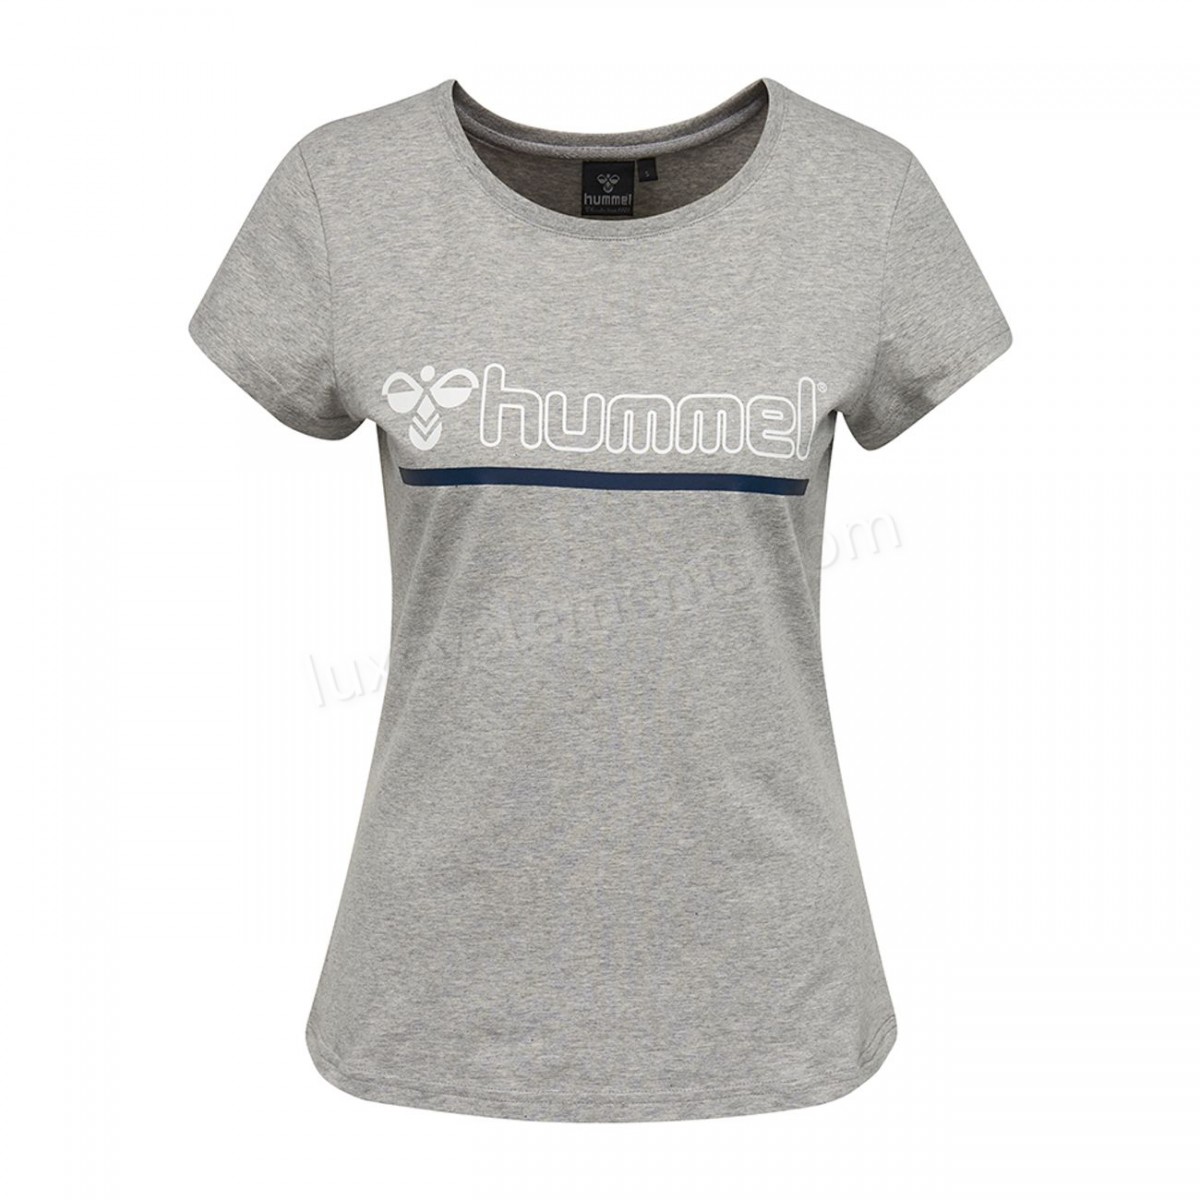 Hummel-Fitness femme HUMMEL T-shirt femme Hummel Classic bee Perla Vente en ligne - -9